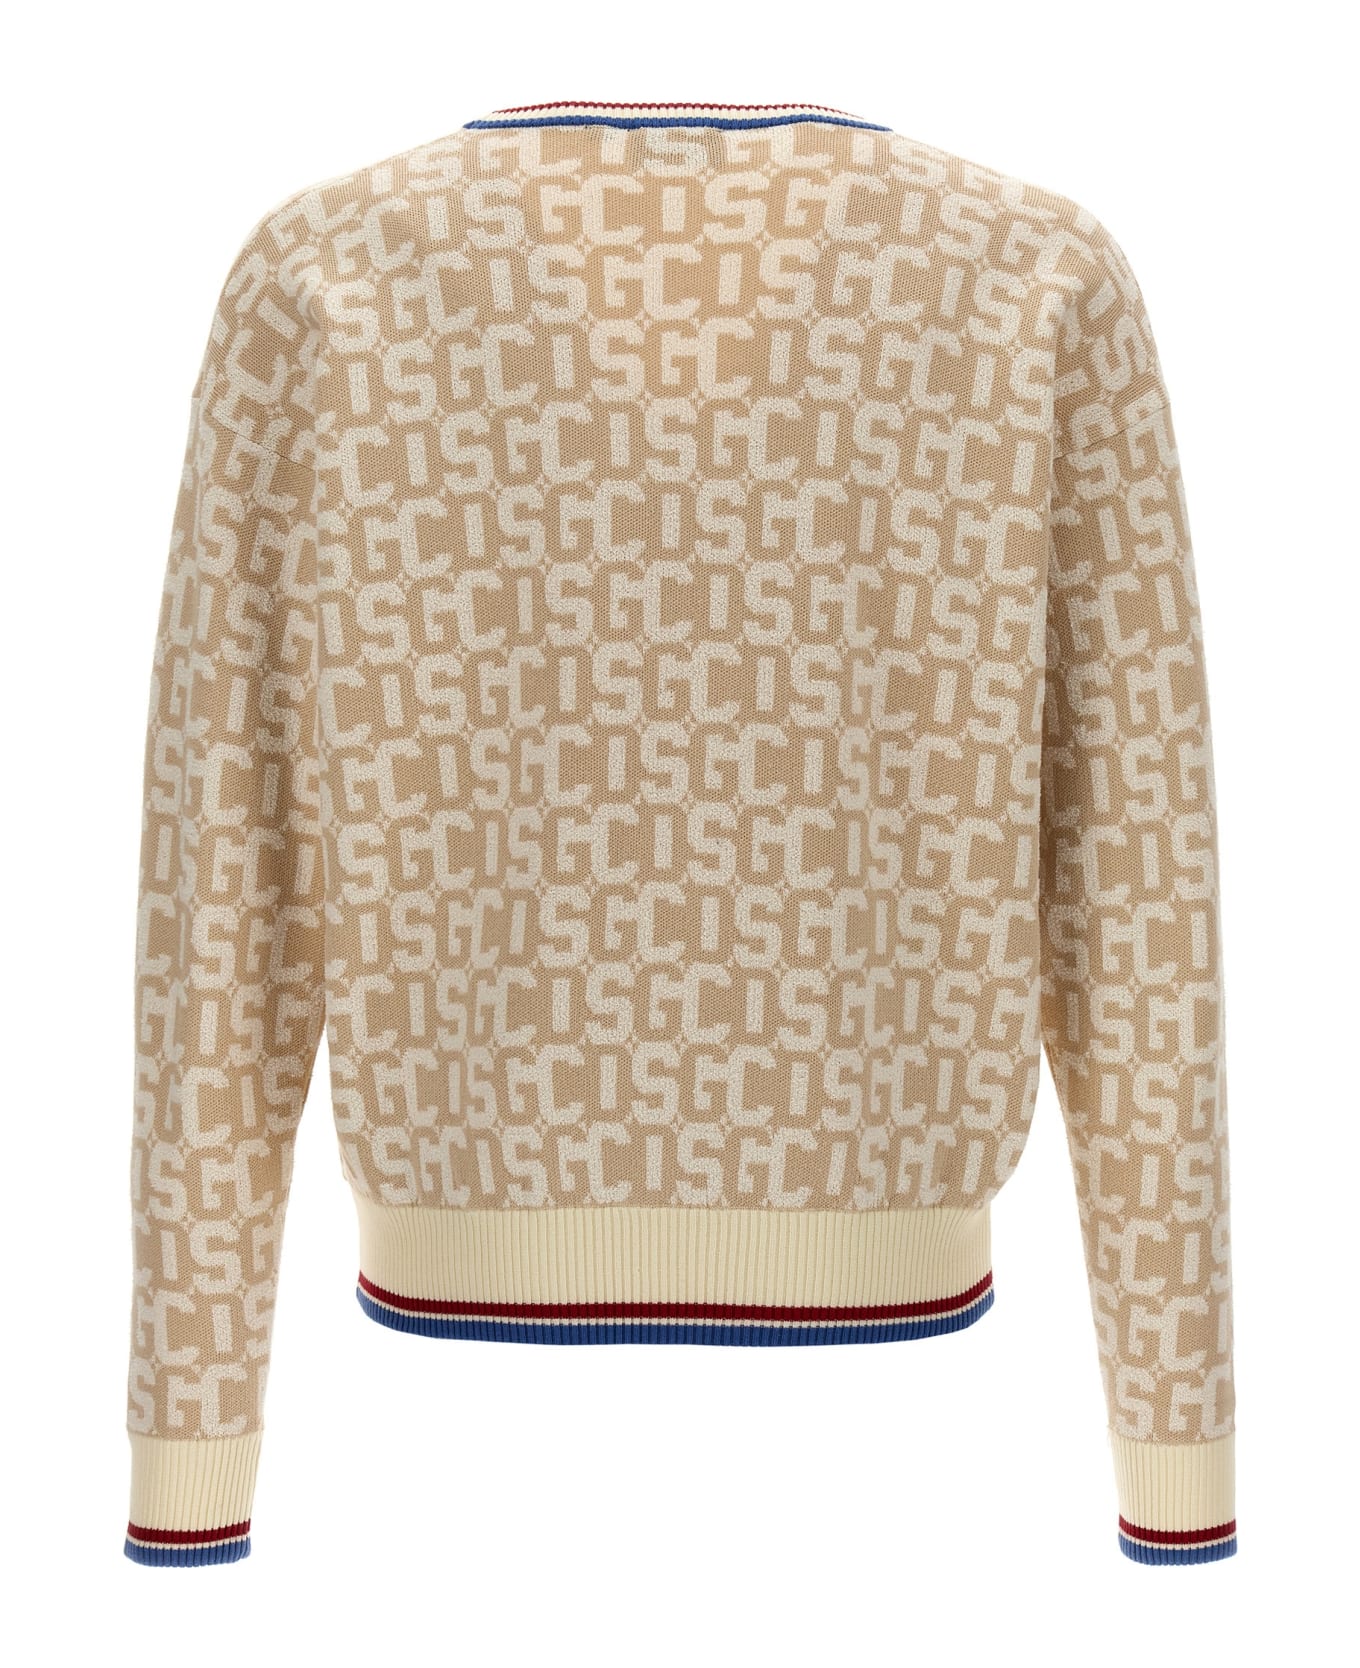 GCDS 'gcds Monogram' Sweater - Beige